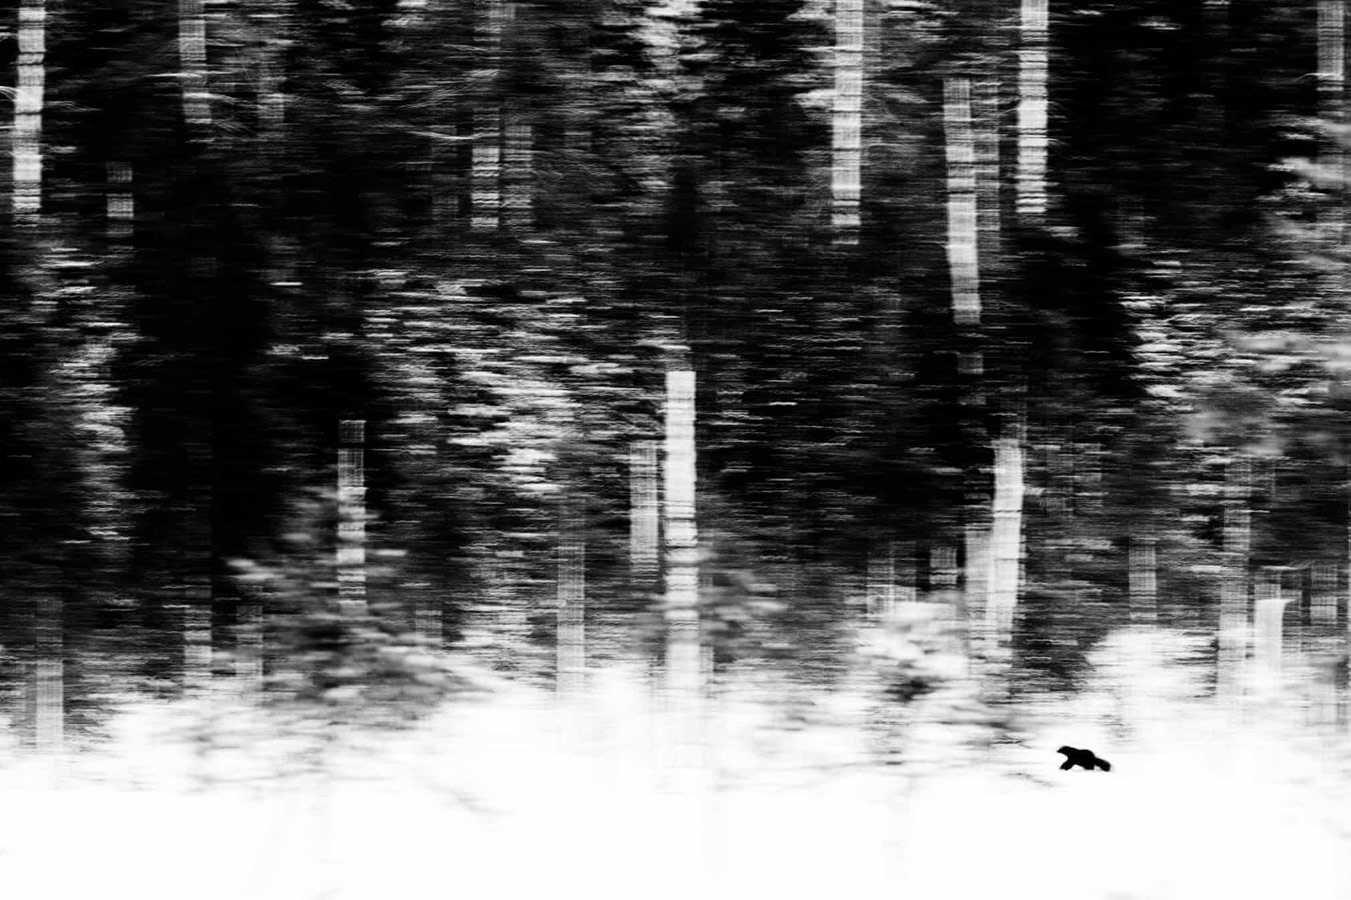 The Lonely Hunter, © Jan van der Greef (NL), Winner Mammals Category, GDT European Wildlife Photographer of the Year